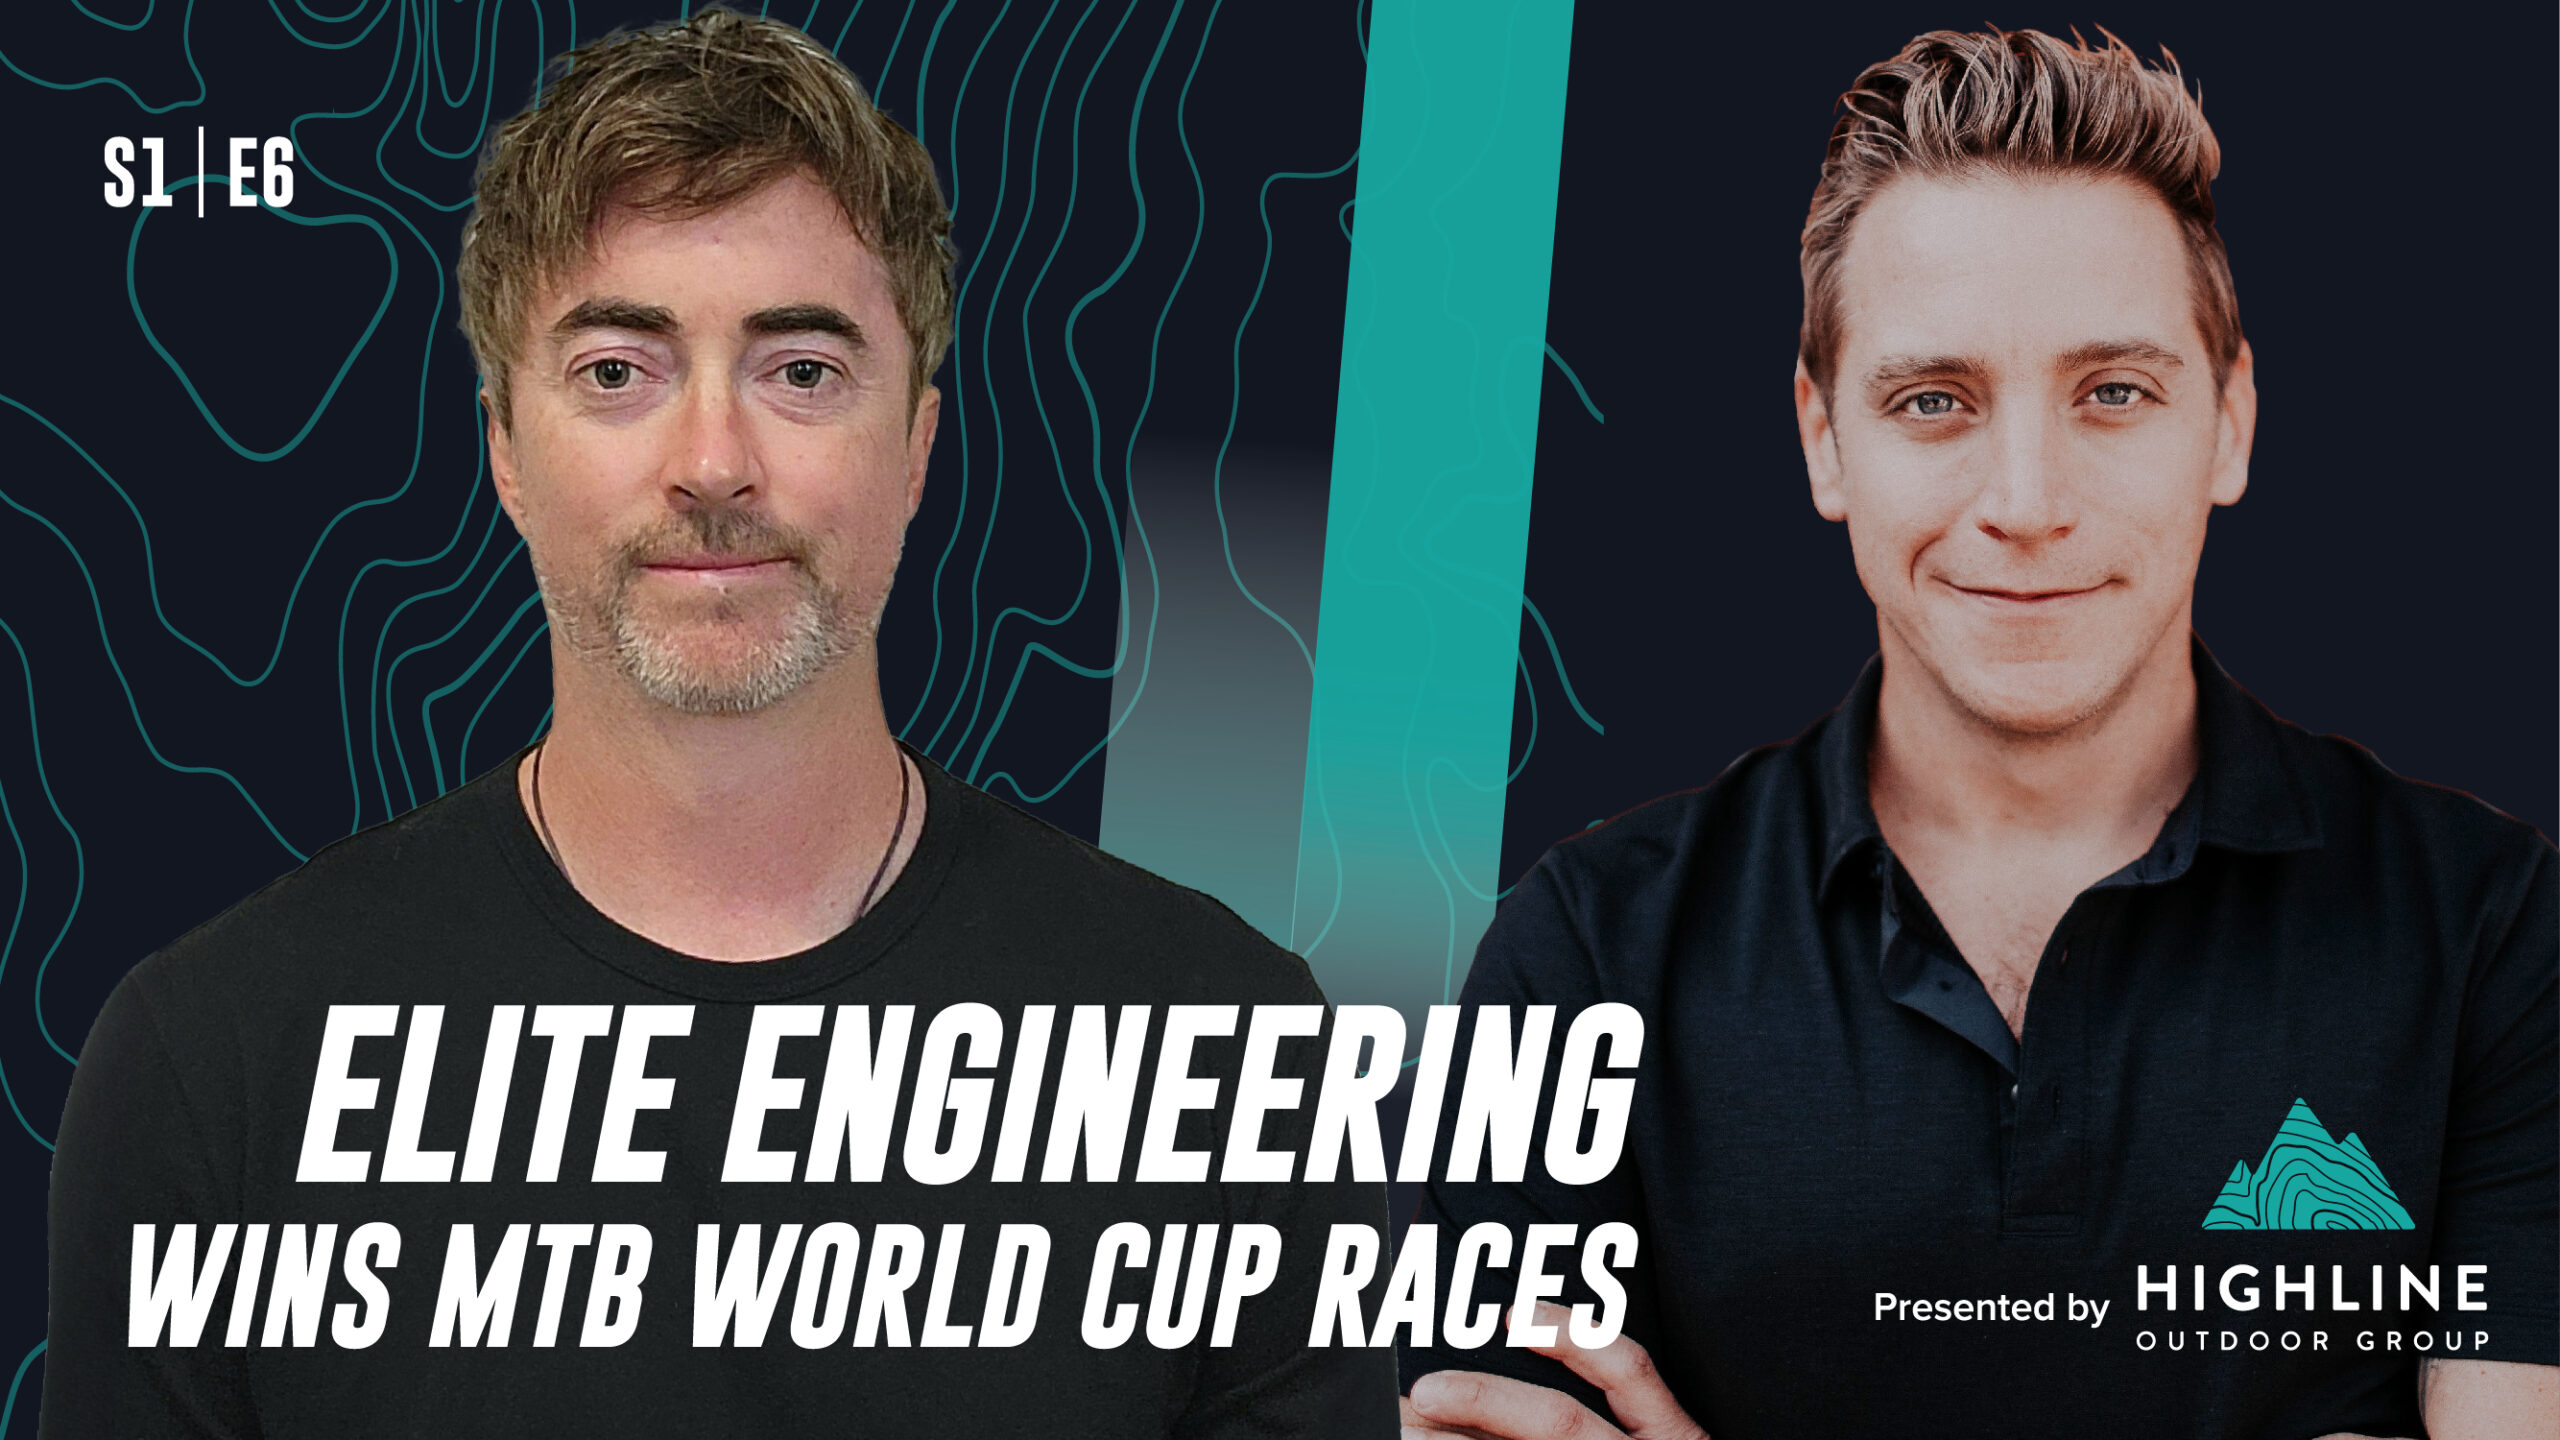 Elite Engineering Wins MTB World Cup Races